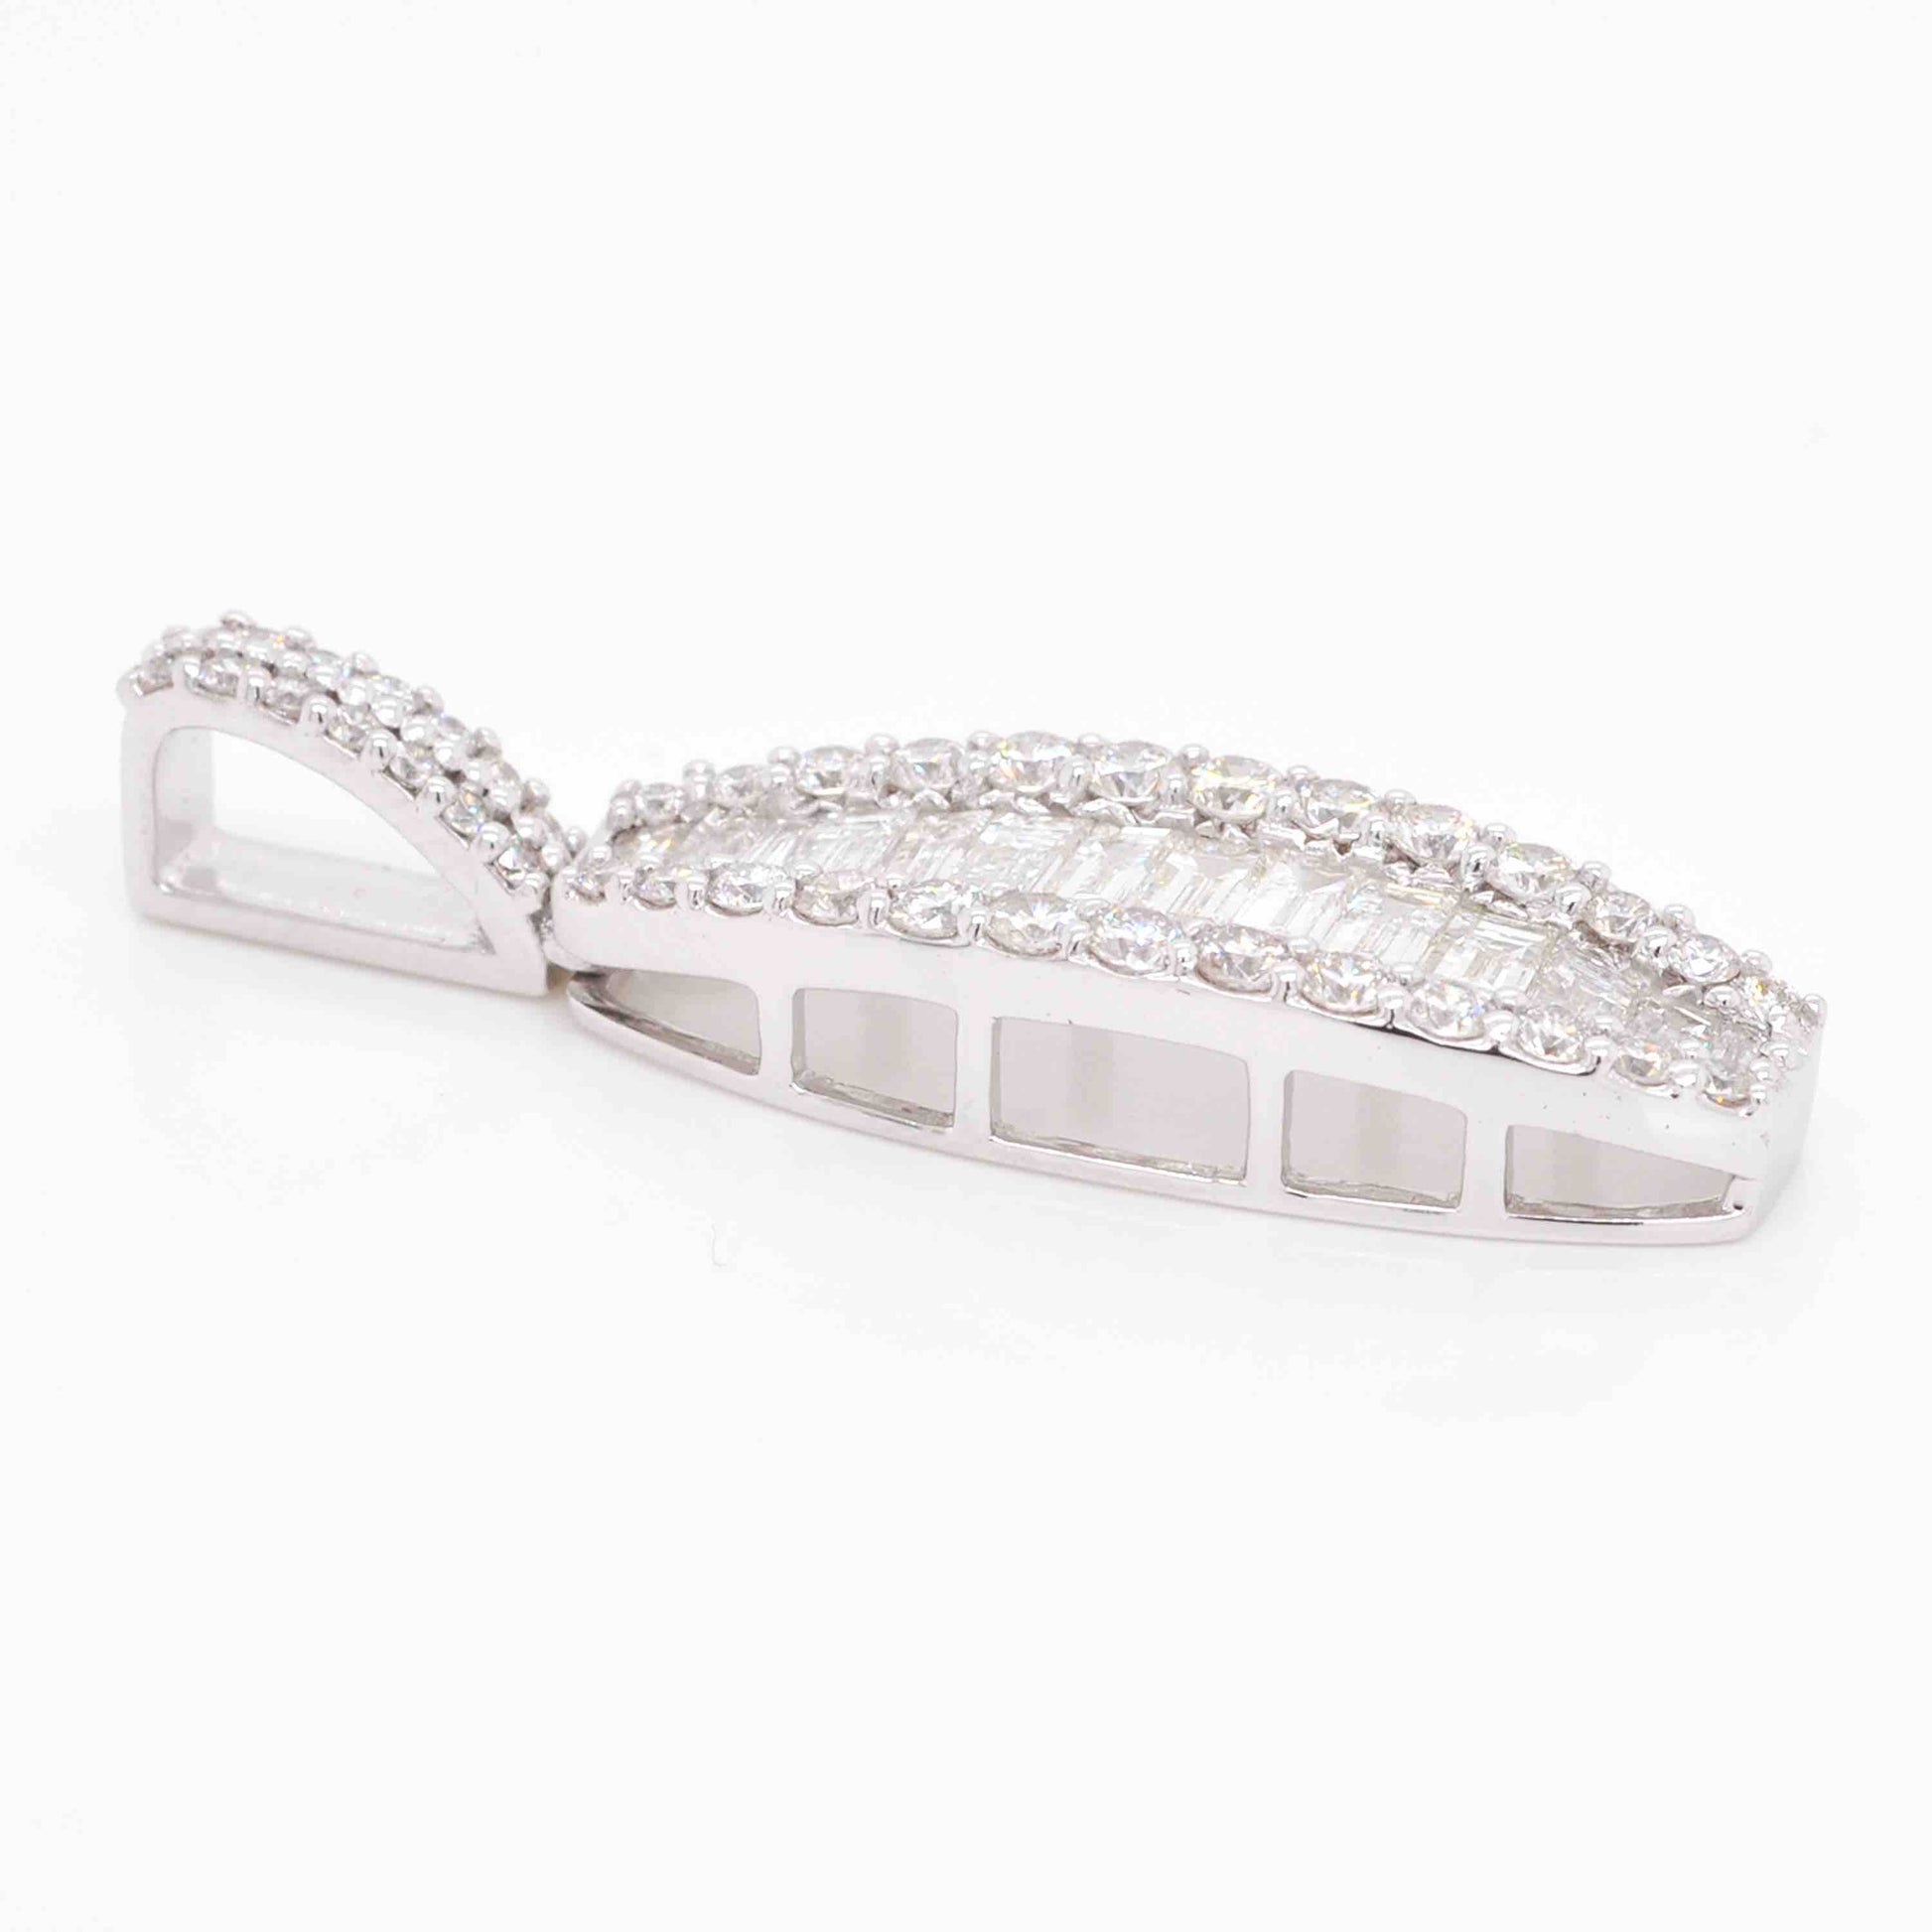 Contemporary Design Diamond Pendant Necklace